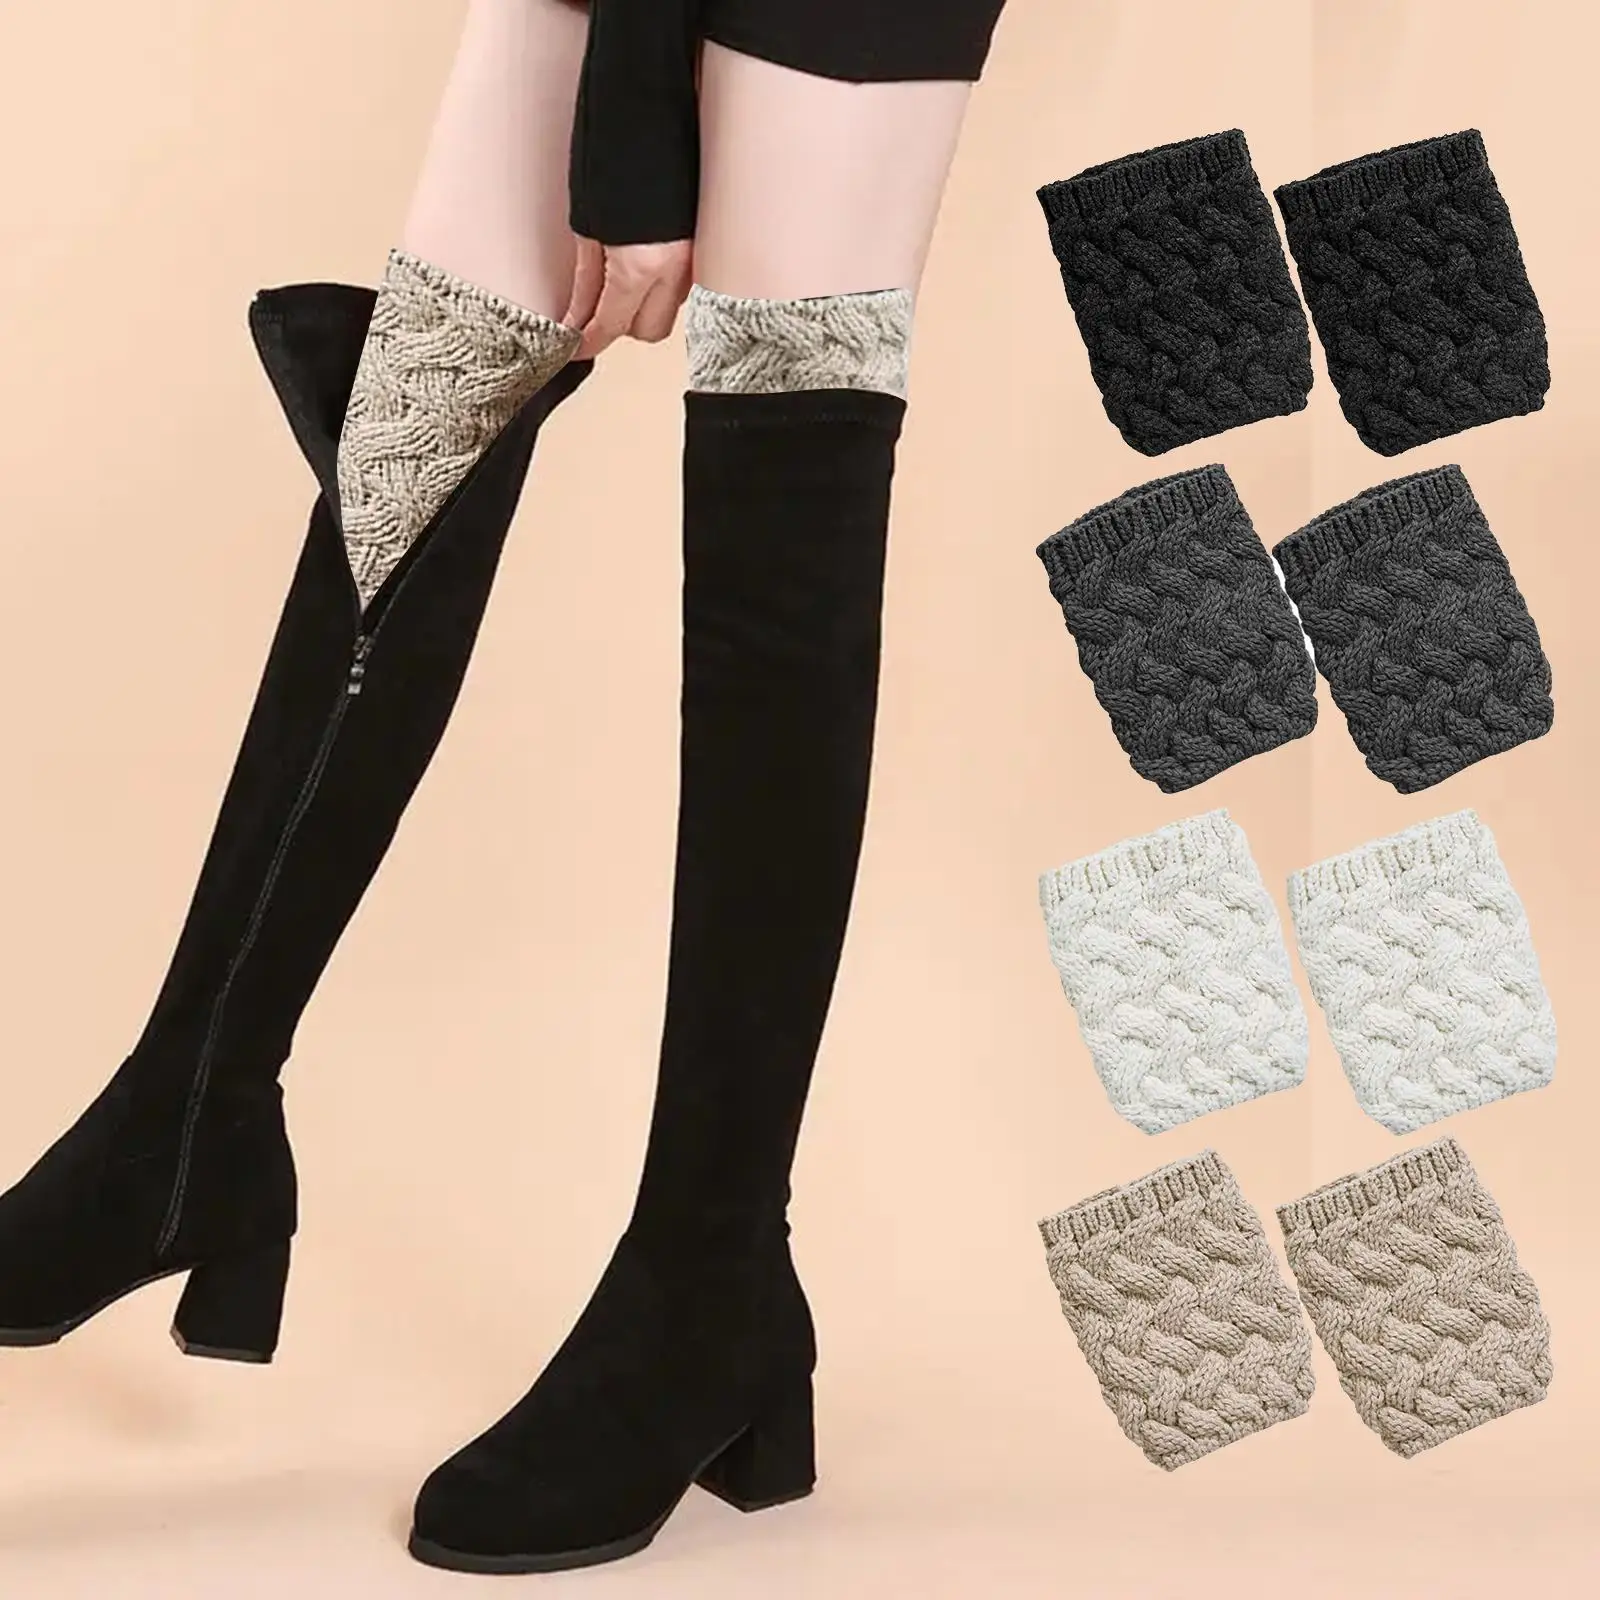 4 Pairs Boot Cuffs Socks Winter Warm Crochet Knitted Boot Cuffs Topper, Made of Acrylic Fibers, Short Leg Warmers